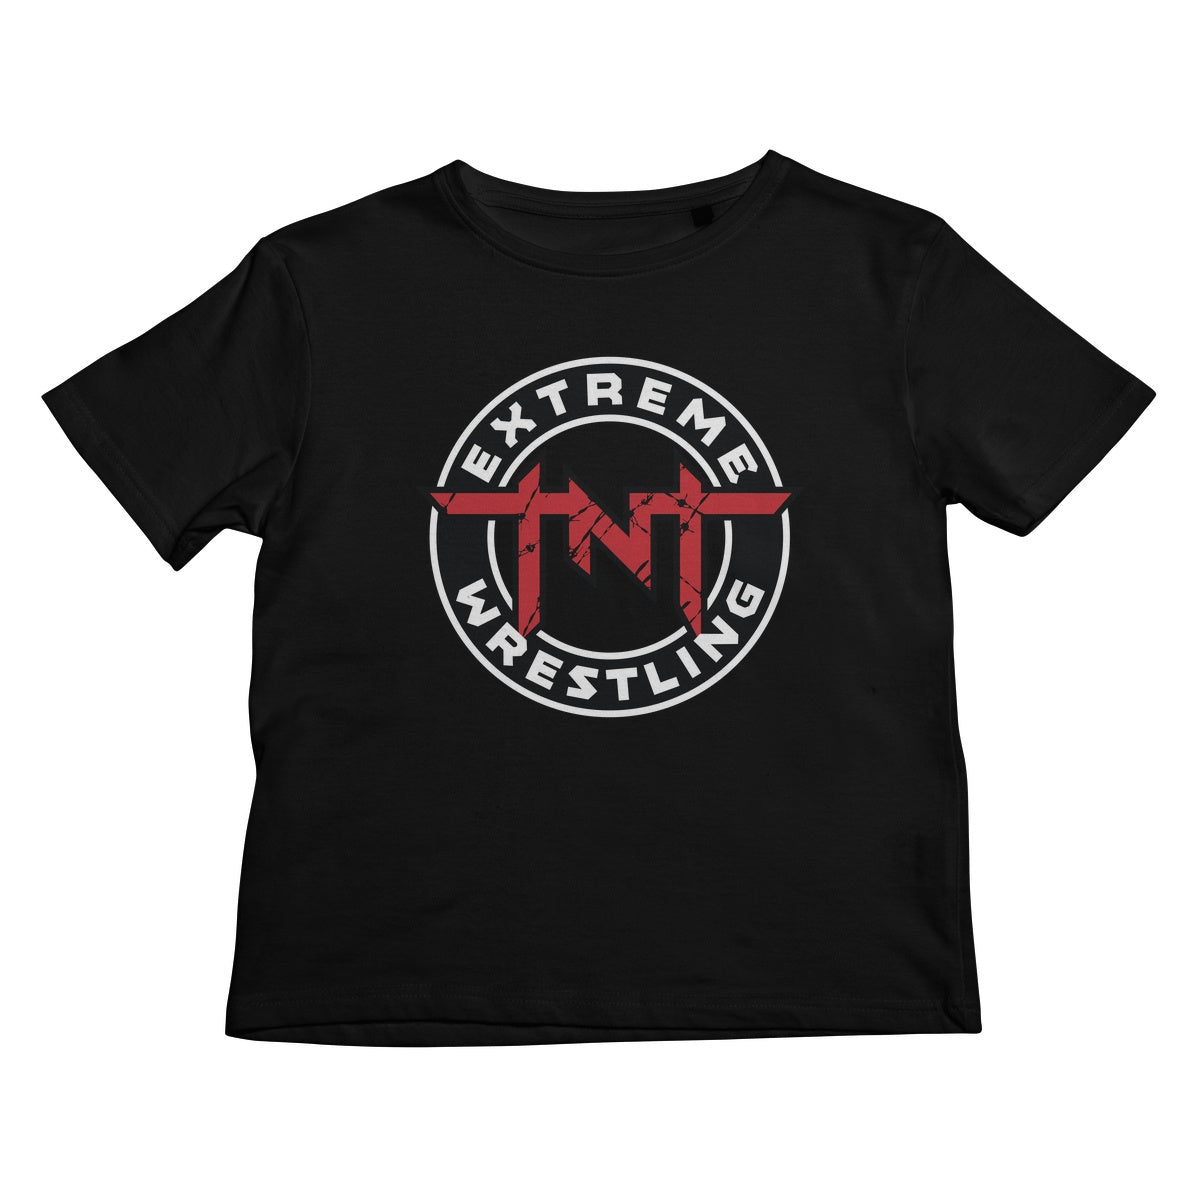 TNT Extreme Wrestling GO EXTREME Kids T-Shirt